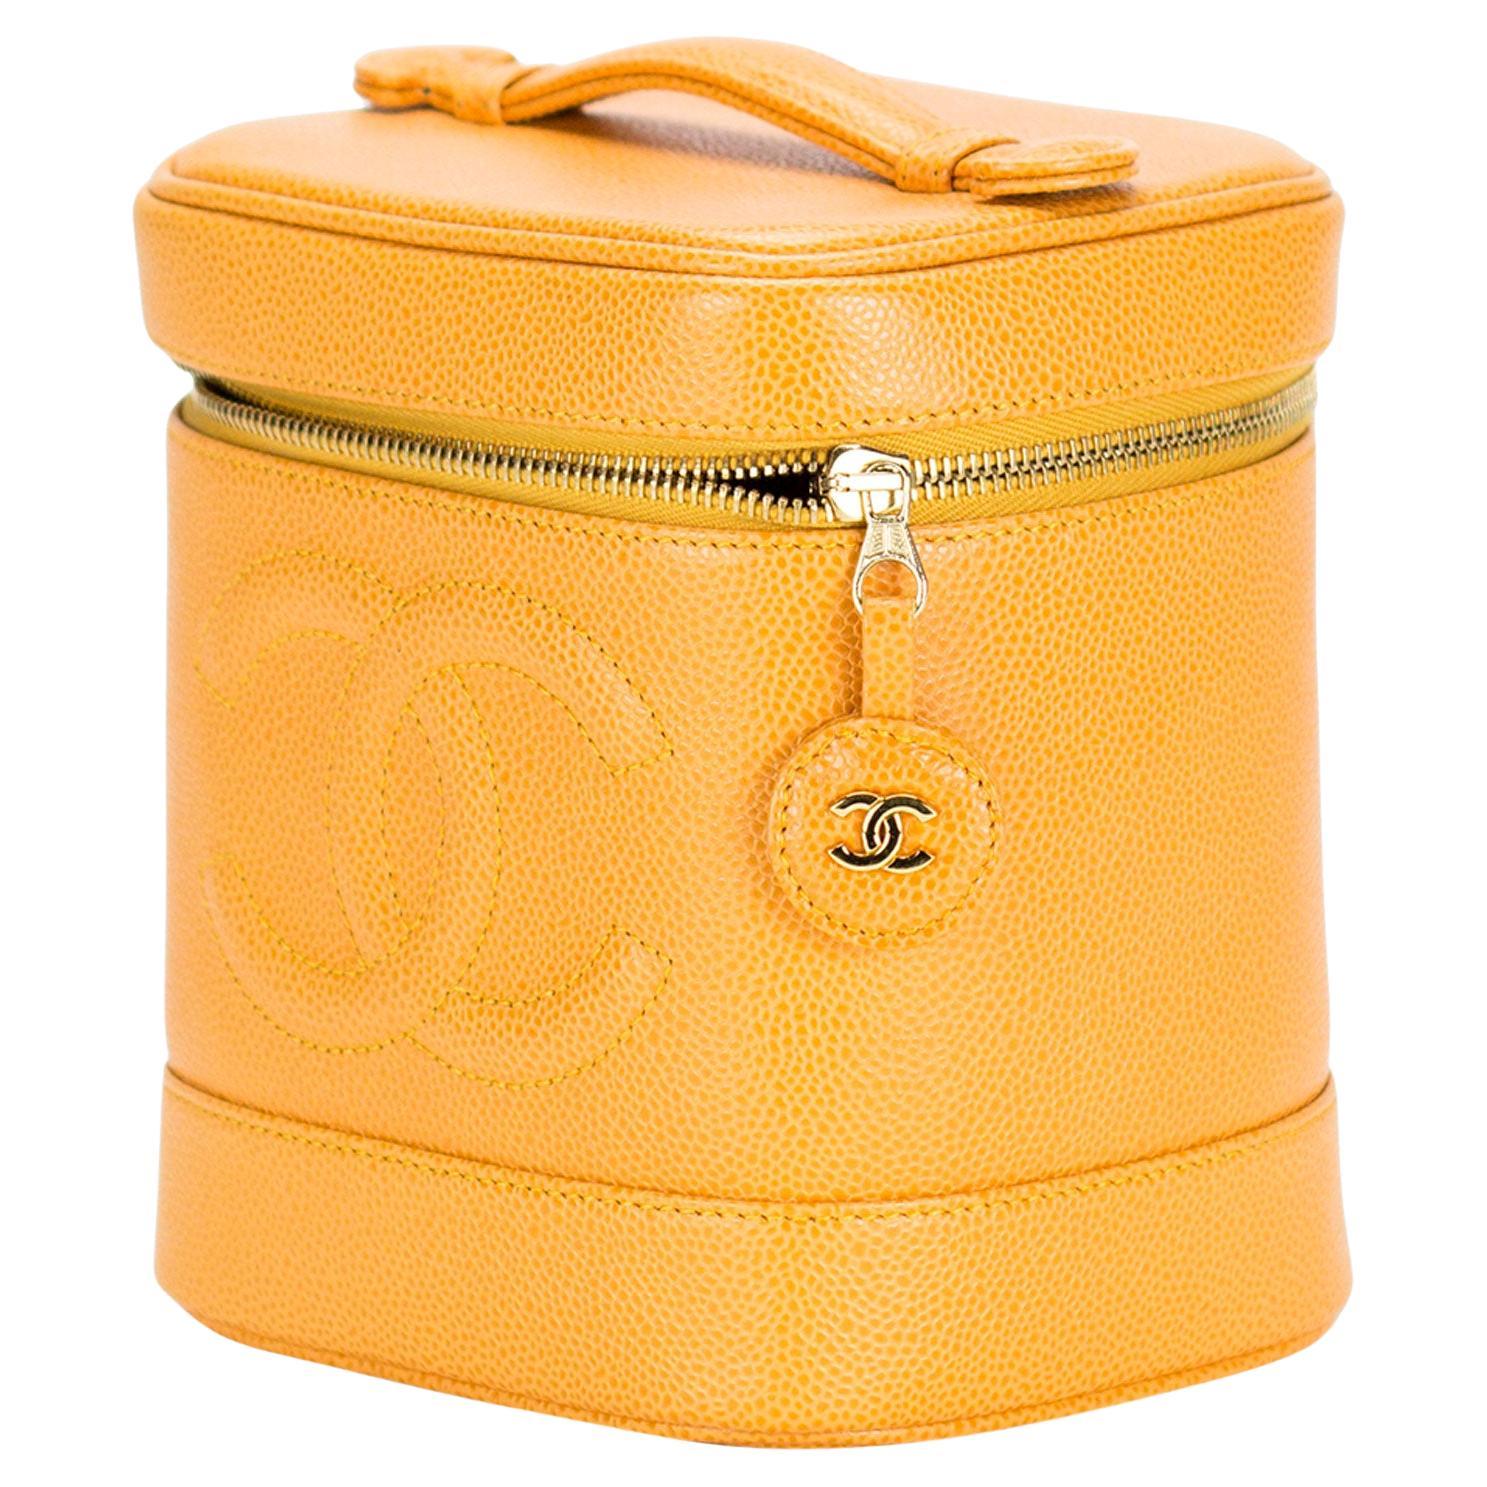 Chanel Vanity Case - 77 For Sale on 1stDibs  chanel vanity bag, channel  vanity bag, chanel pink vanity case